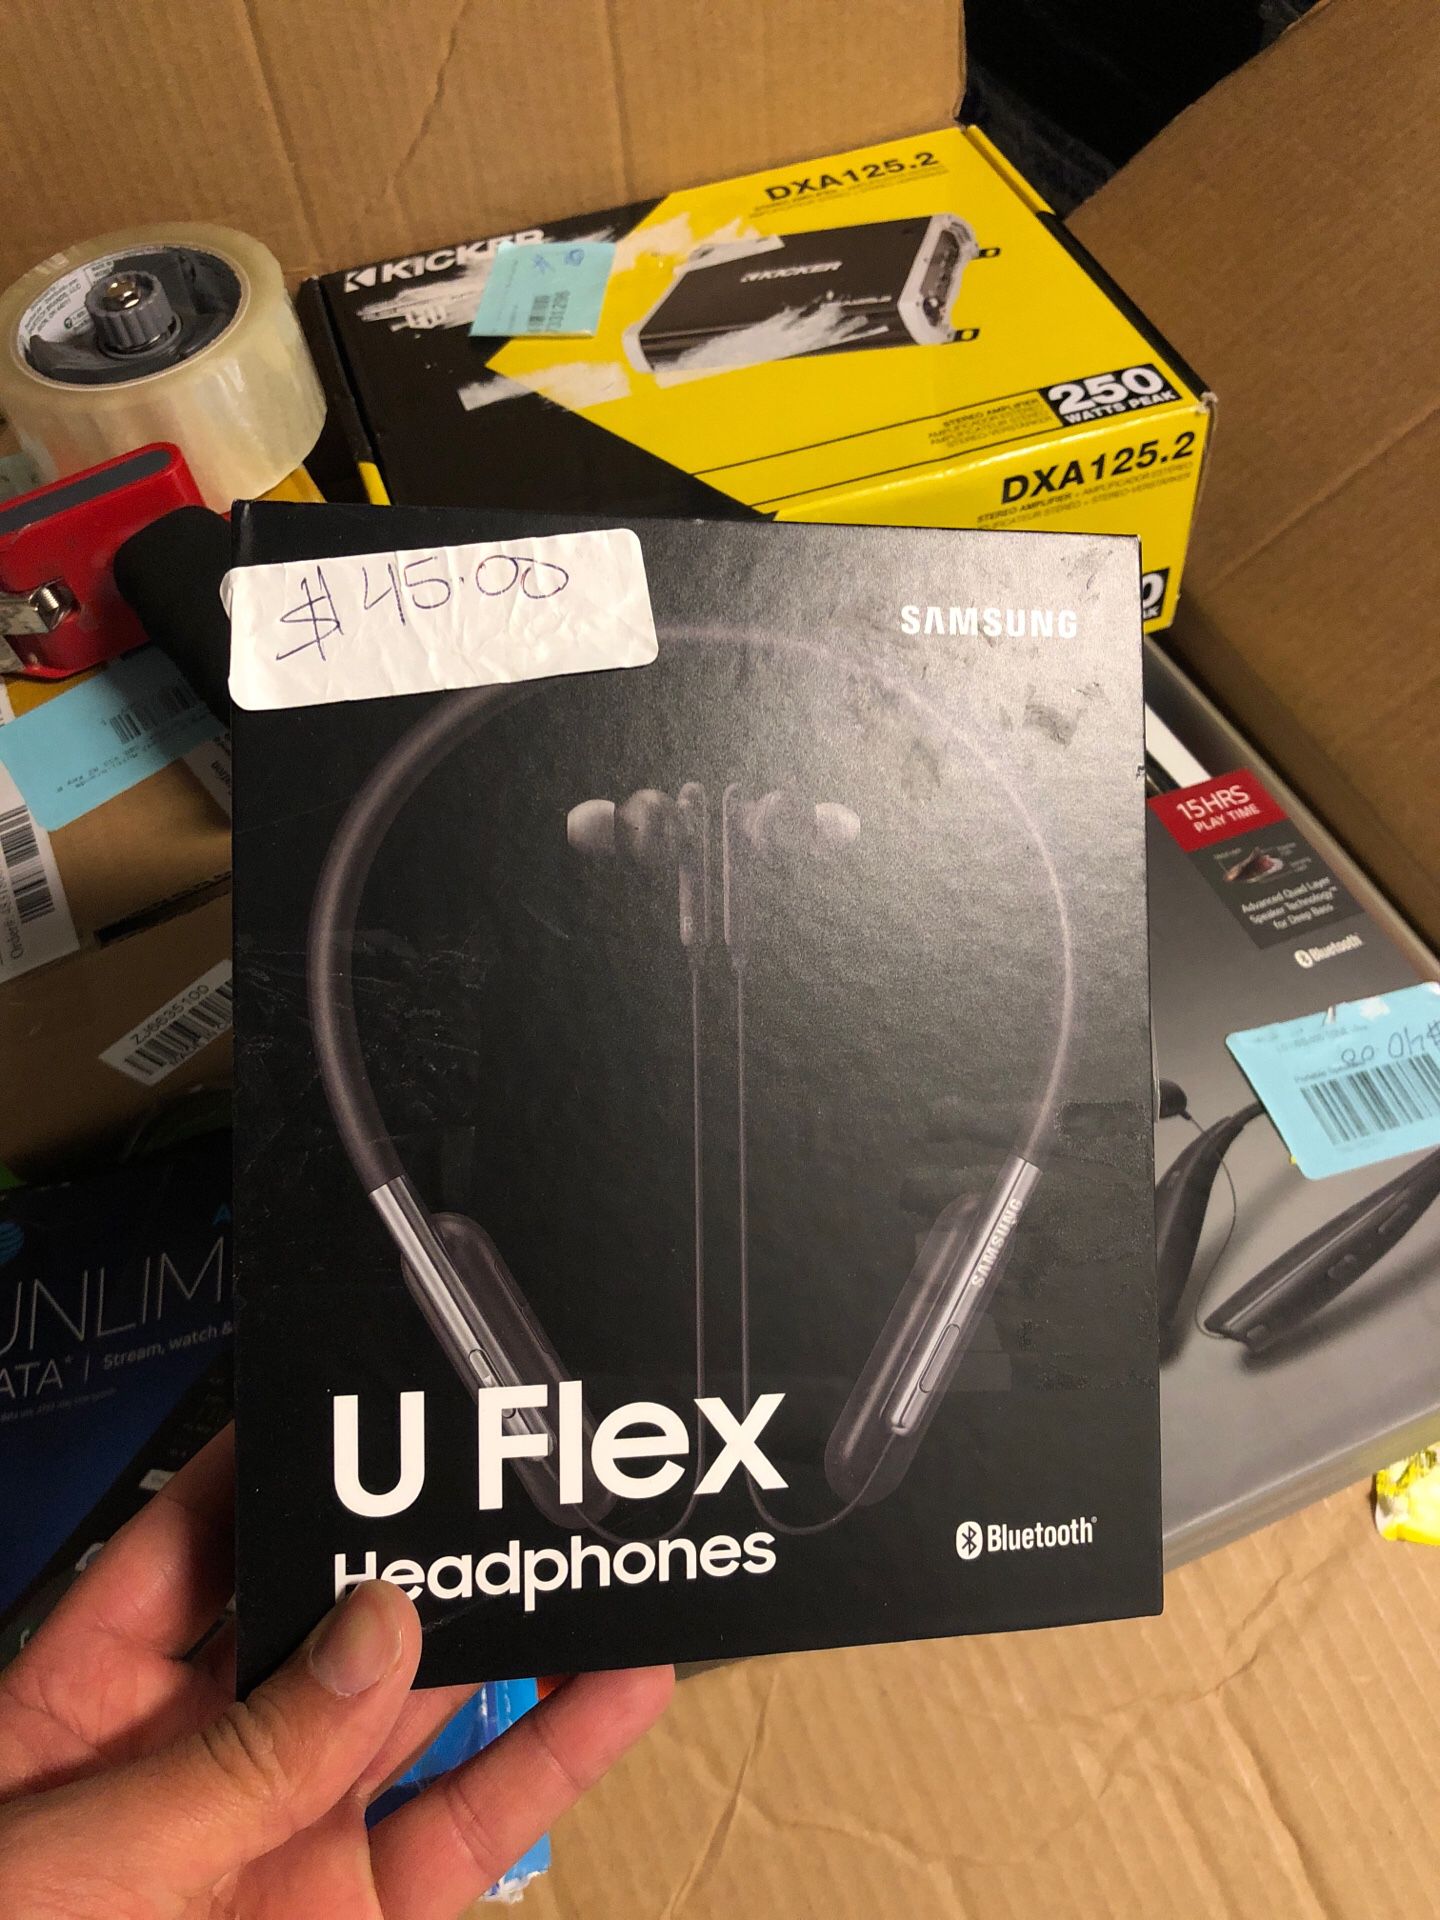 U Flex Headphones by Samsung